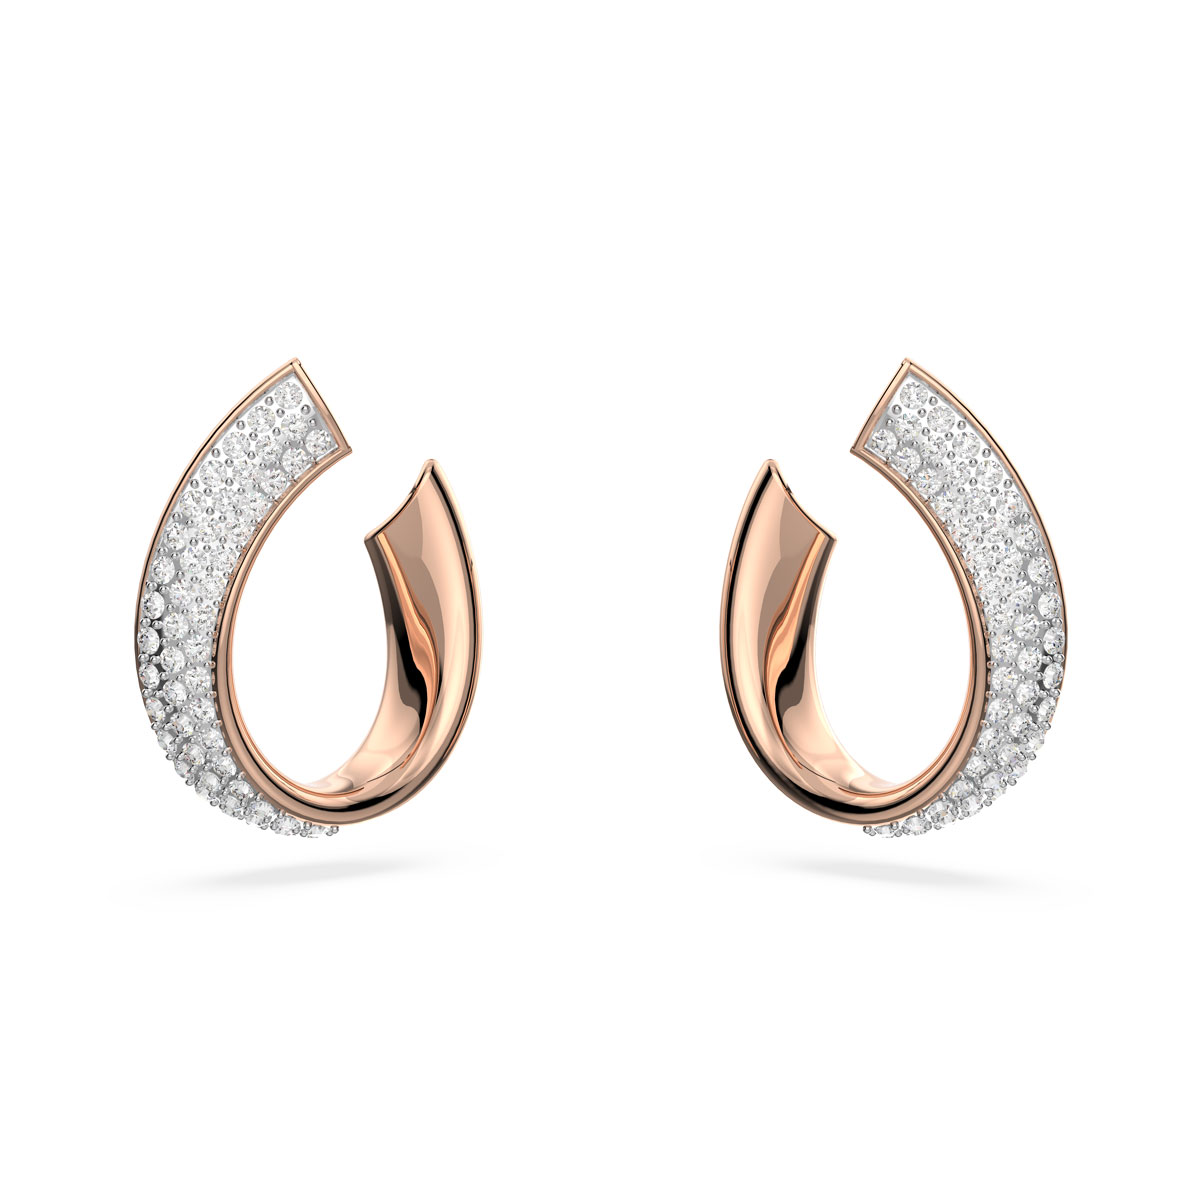 Swarovski Crystal and Gold Exist Small Hoop Pierced Earrings, Pair